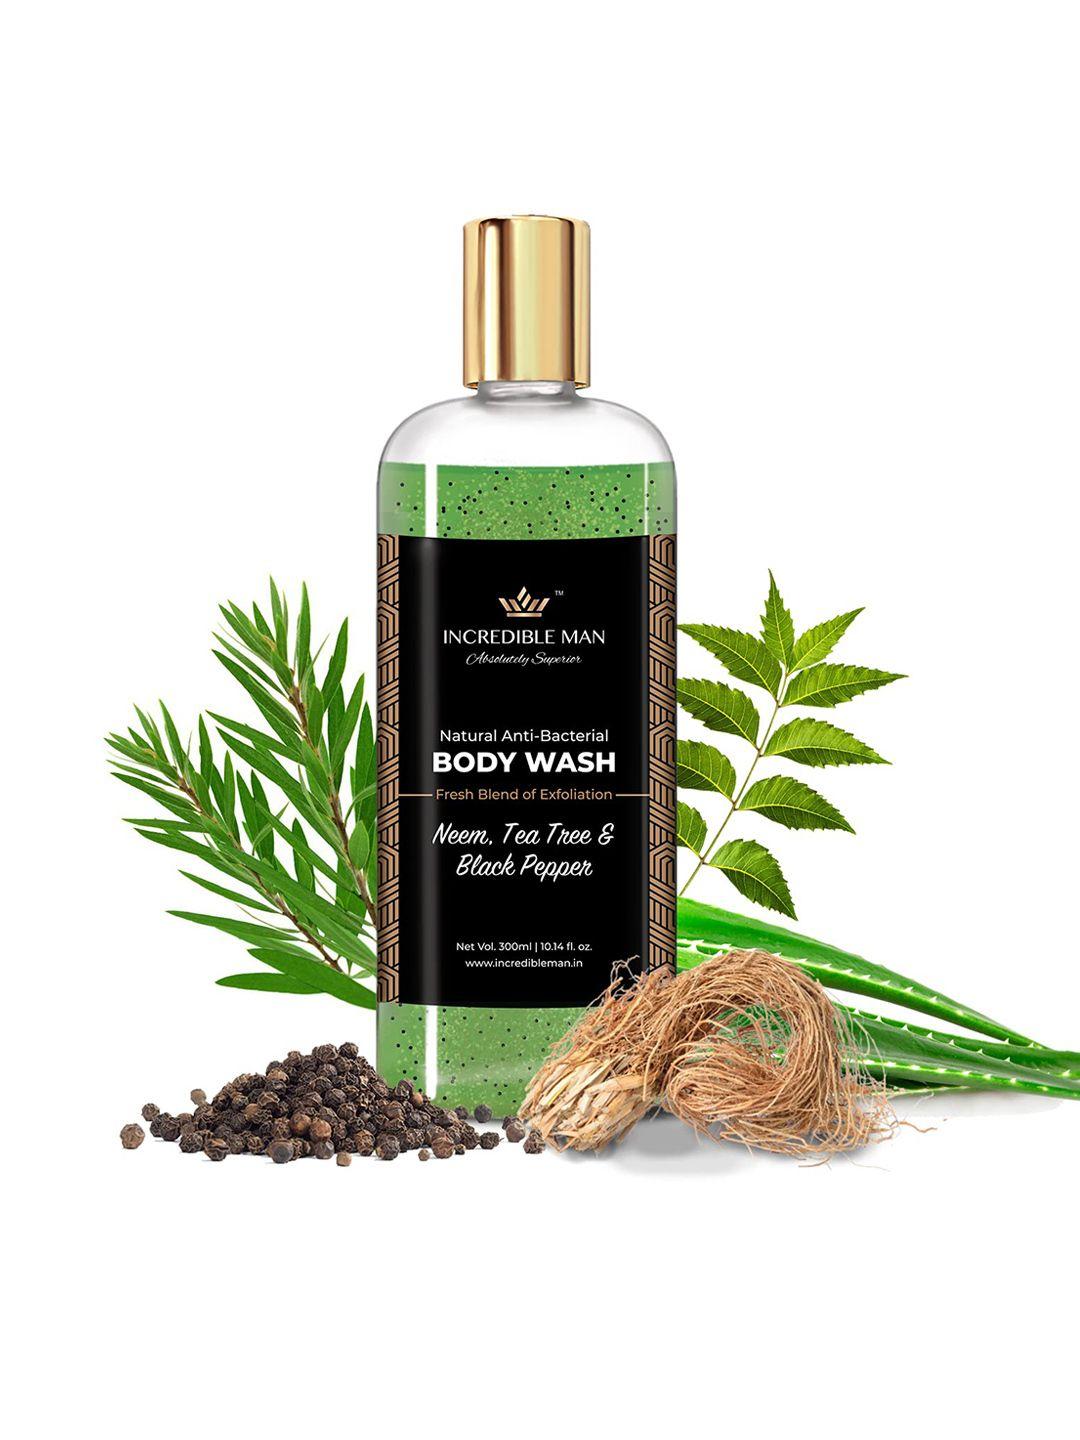 incredible man natural anti-bacterial body wash with neem-tea tree & black pepper - 300 ml